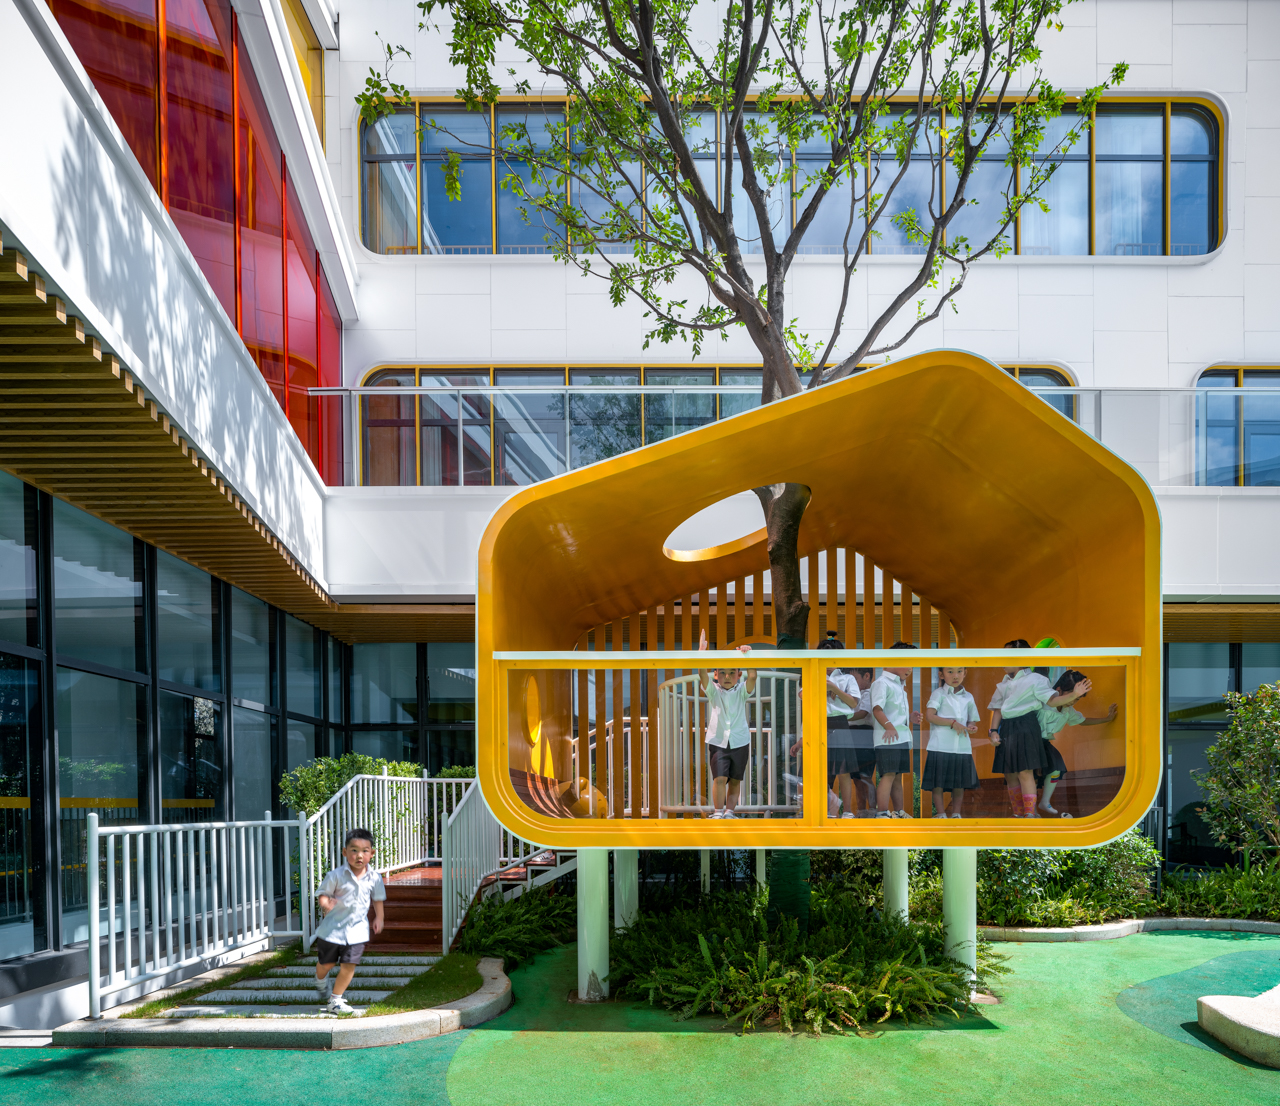 200 Architecture for Kids ideas  architecture, kid spaces, kindergarten  design